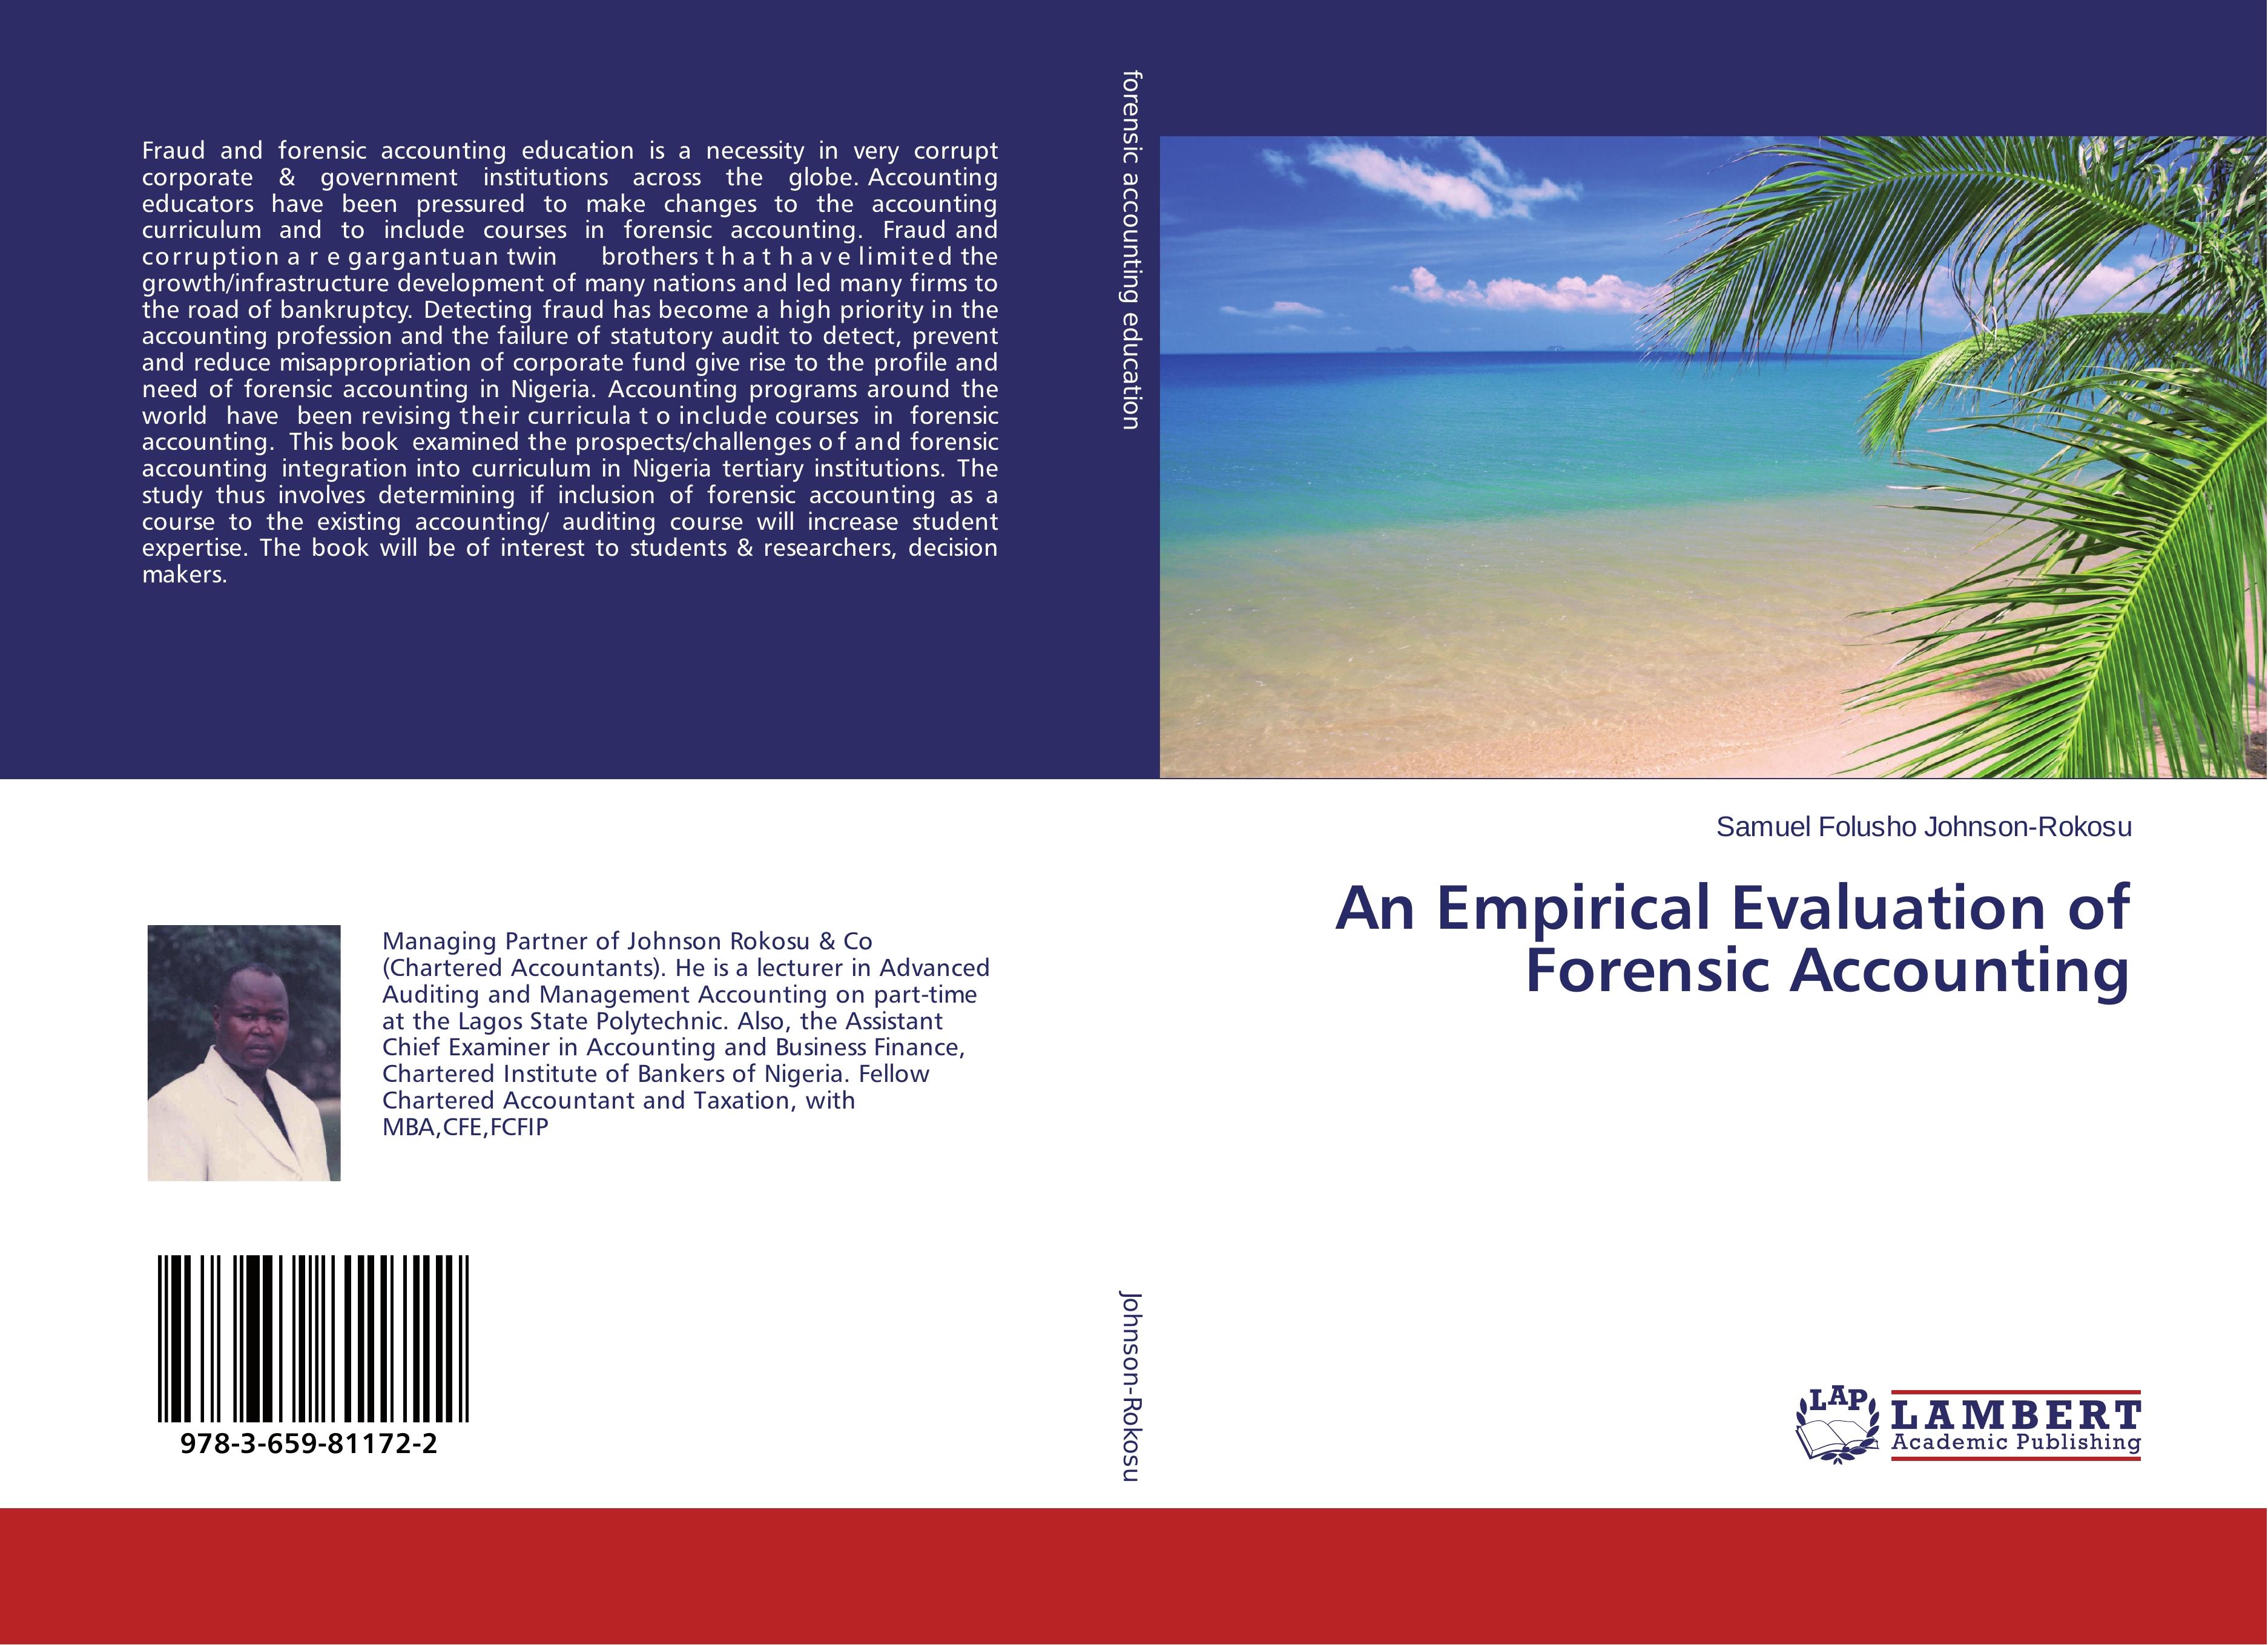 An Empirical Evaluation of Forensic Accounting - Johnson-Rokosu, Samuel Folusho